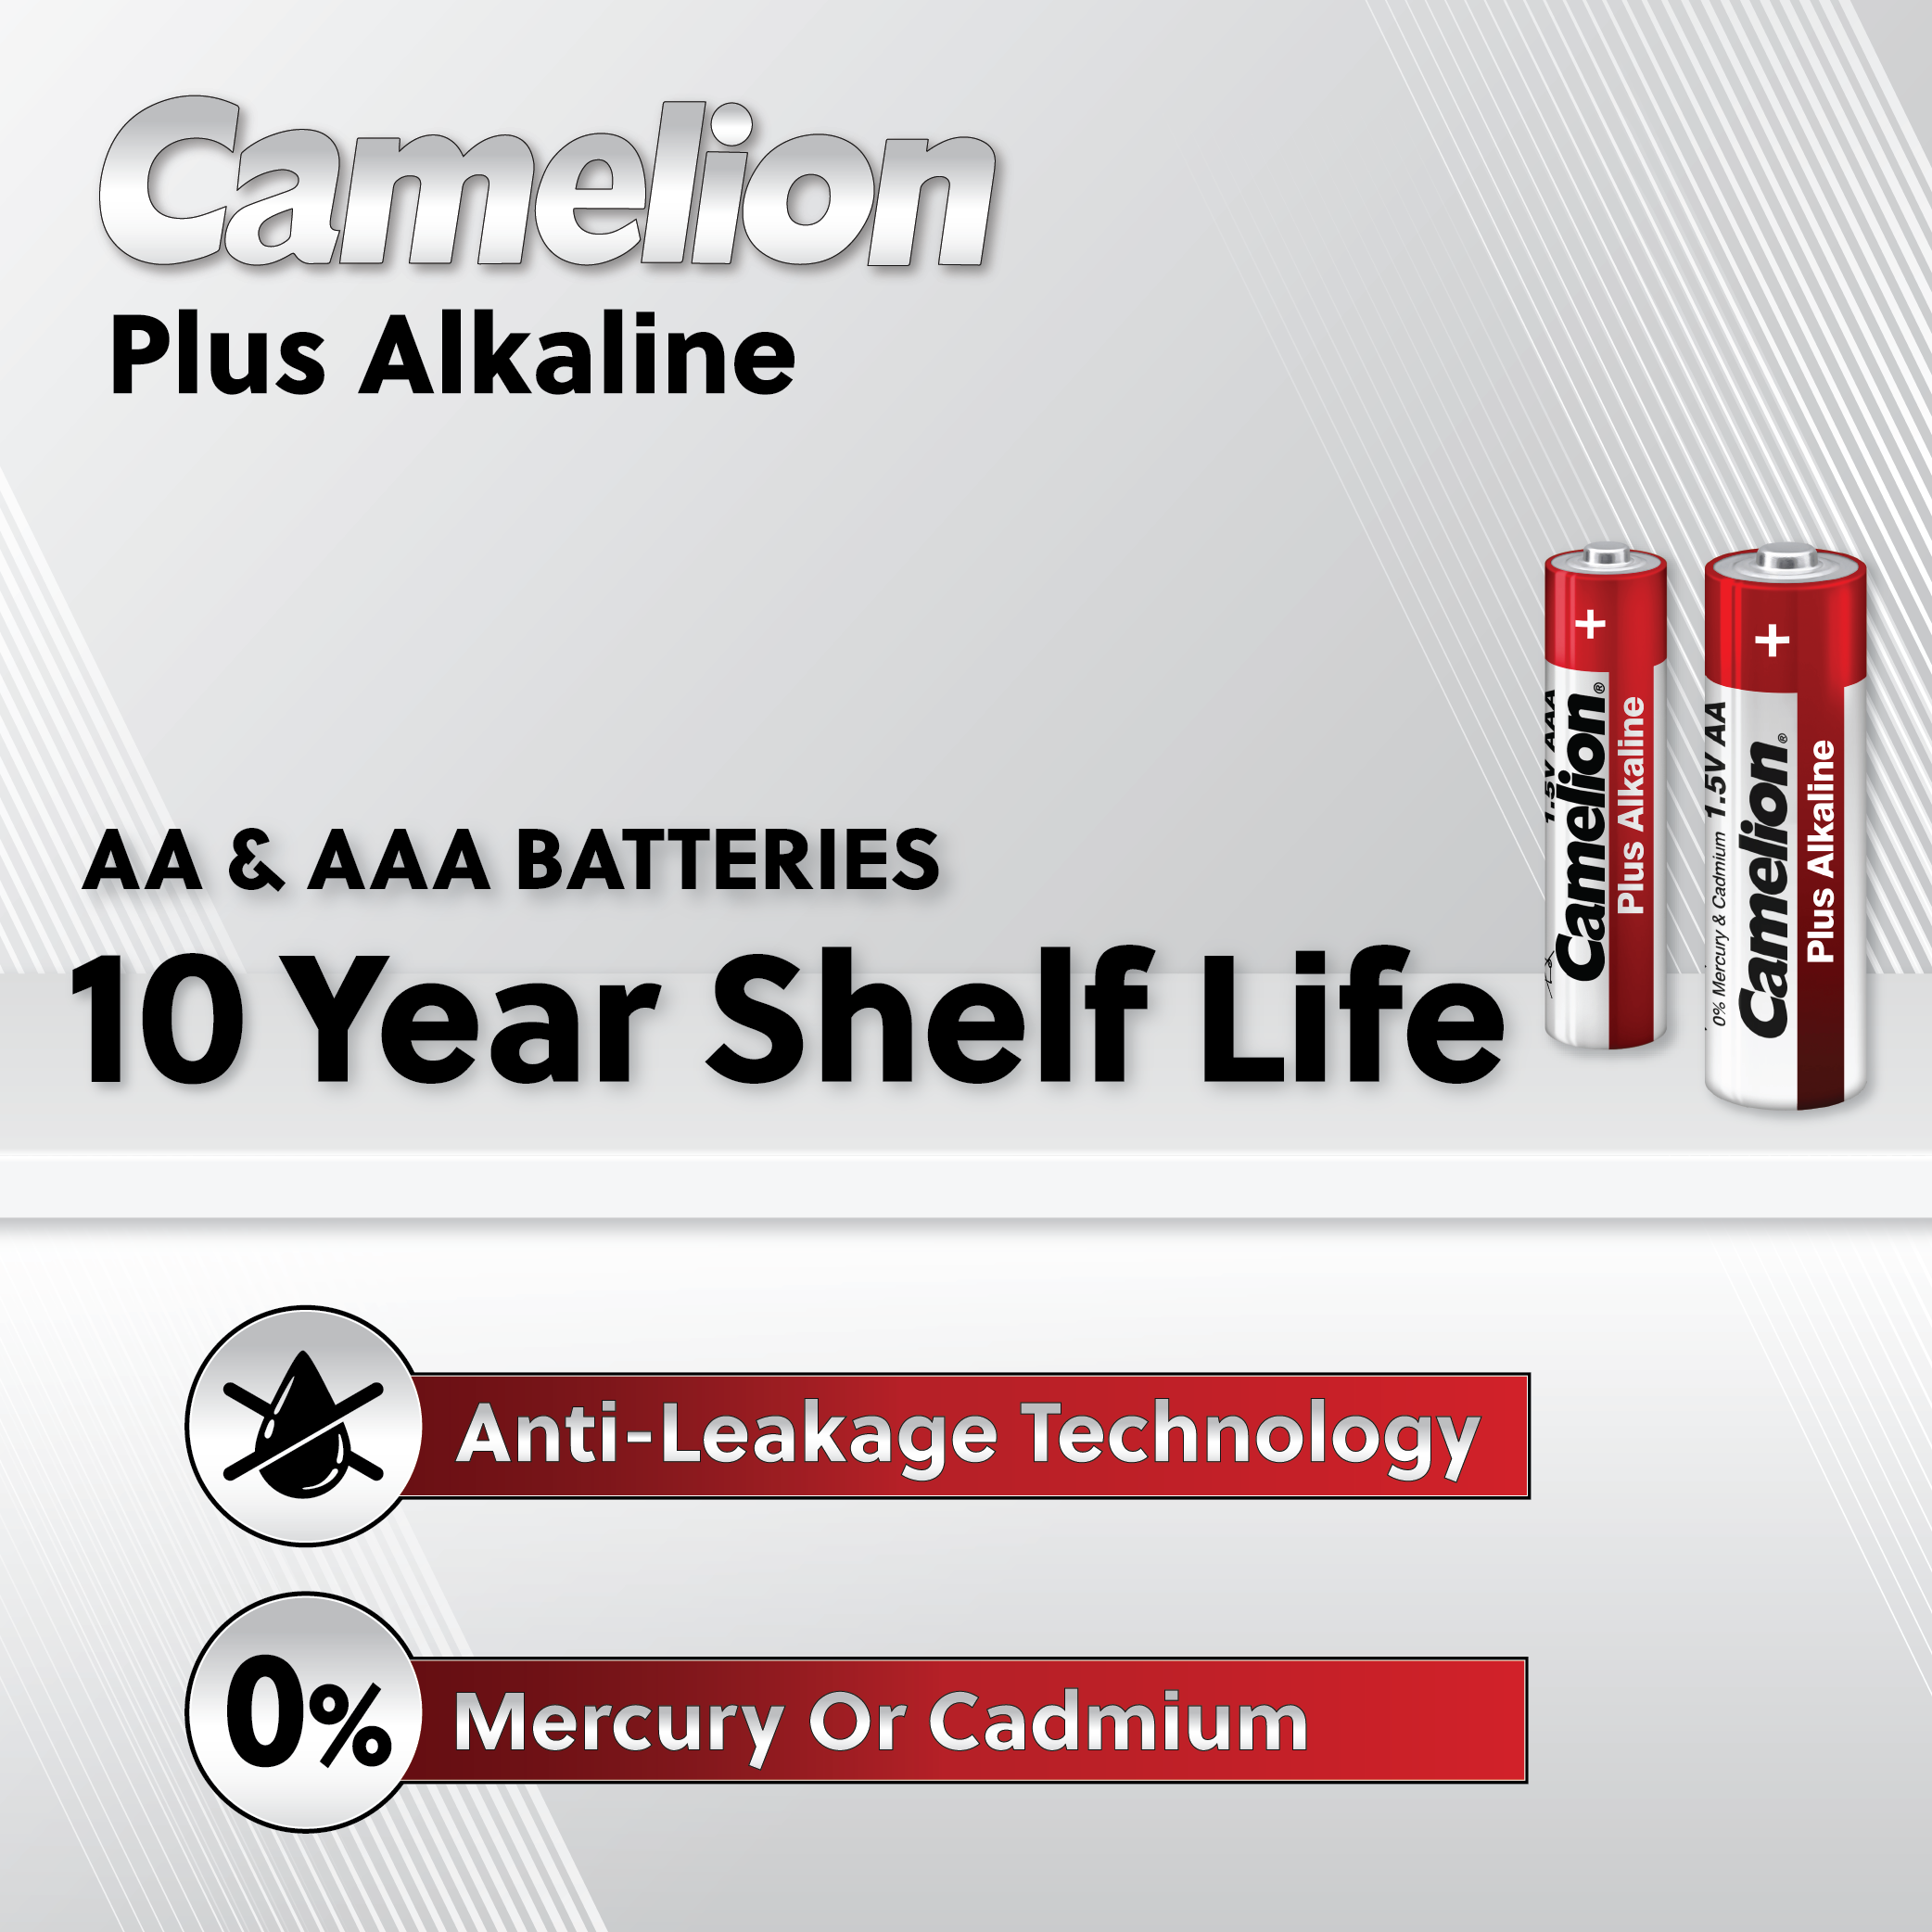 Camelion AA Plus Alkaline